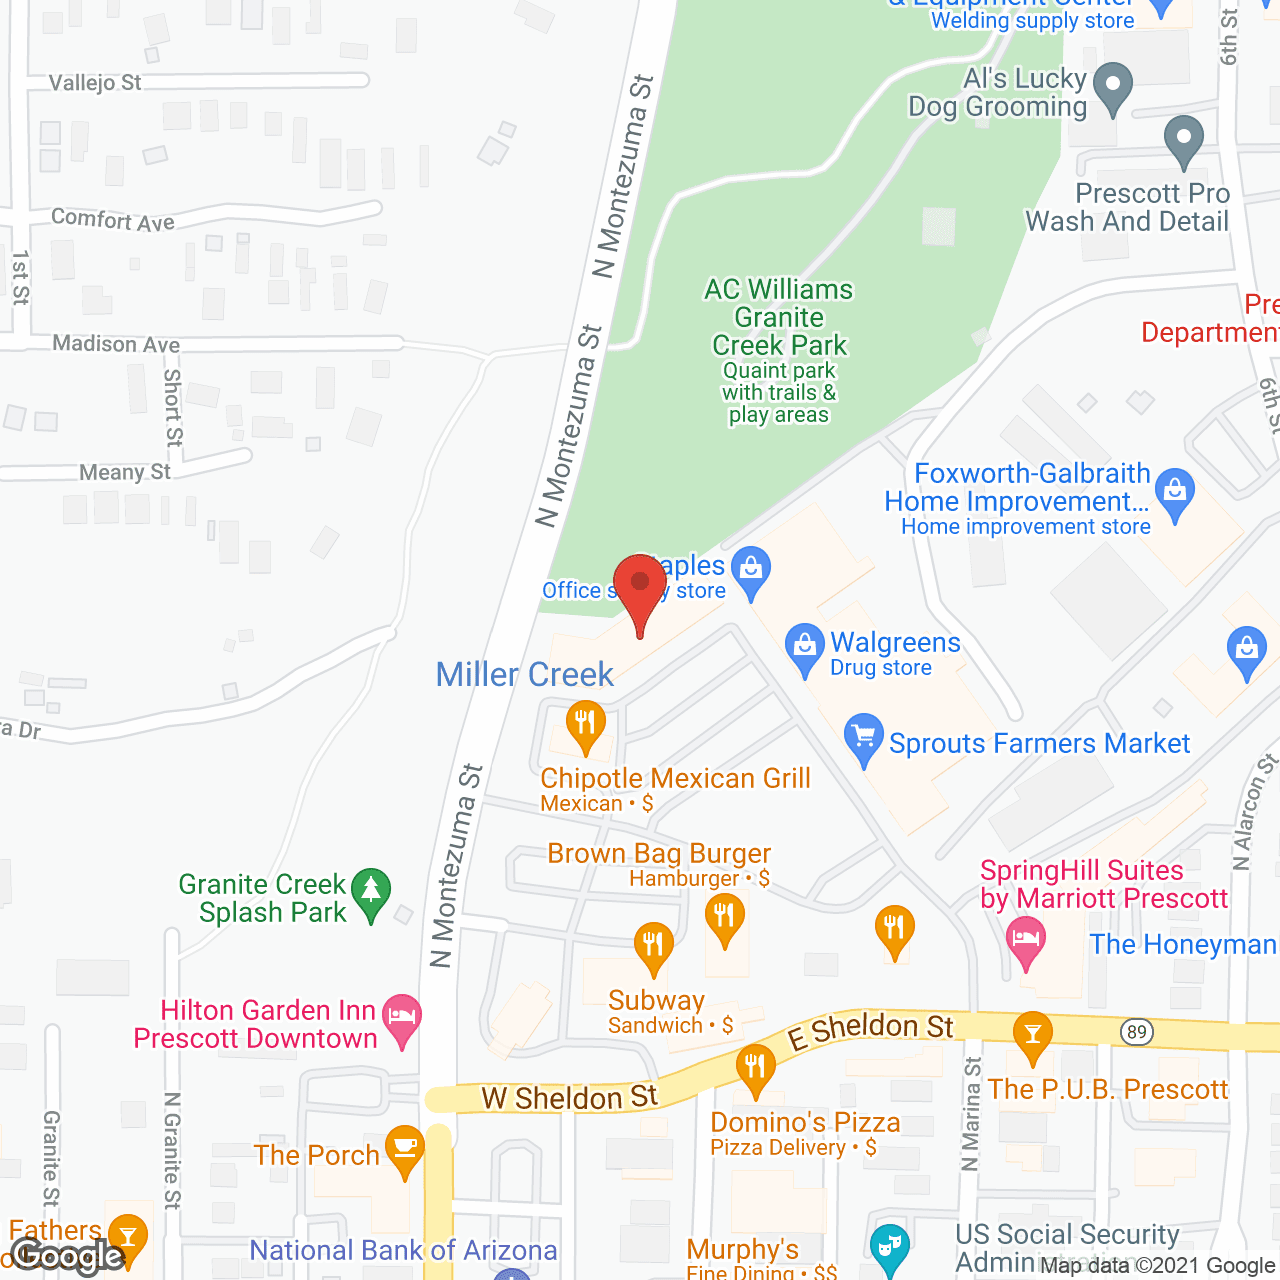 TheKey of Prescott, AZ in google map